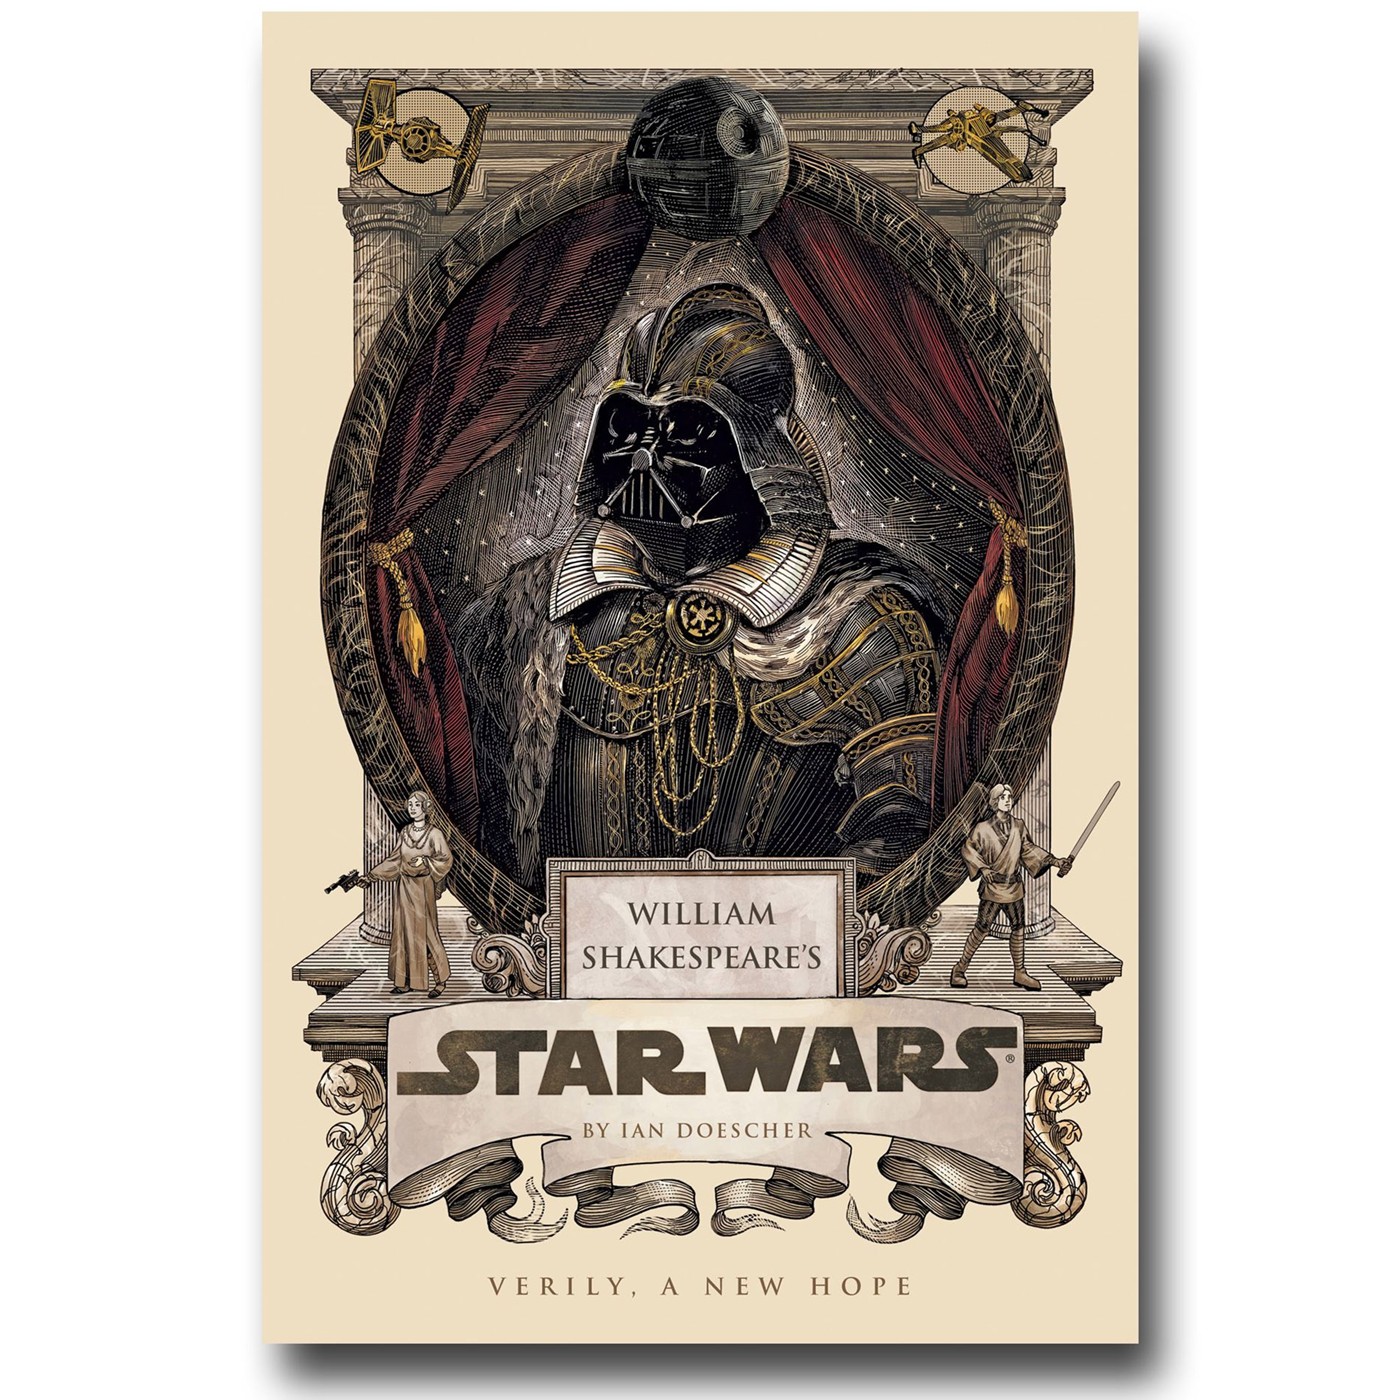 William Shakespeare's Star Wars Book